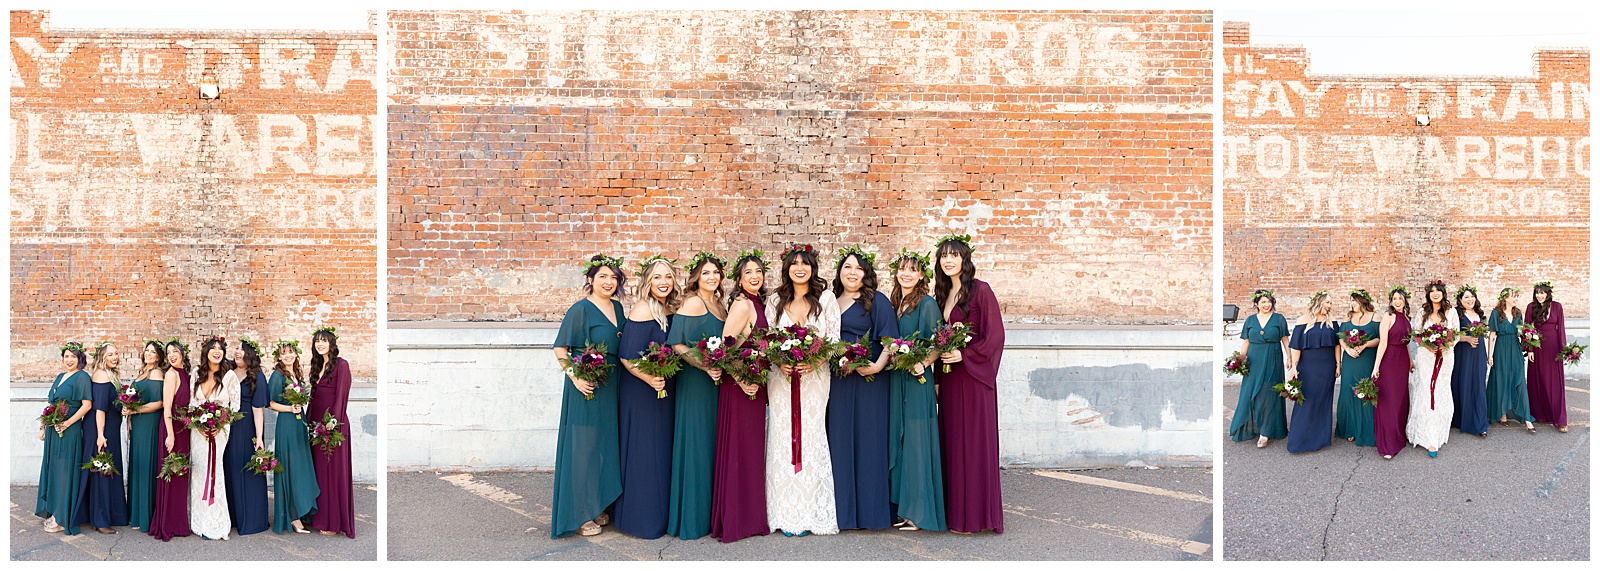 Jewel Tone bridesmaid dresses captured by Phoenix Photographer Riane Roberts